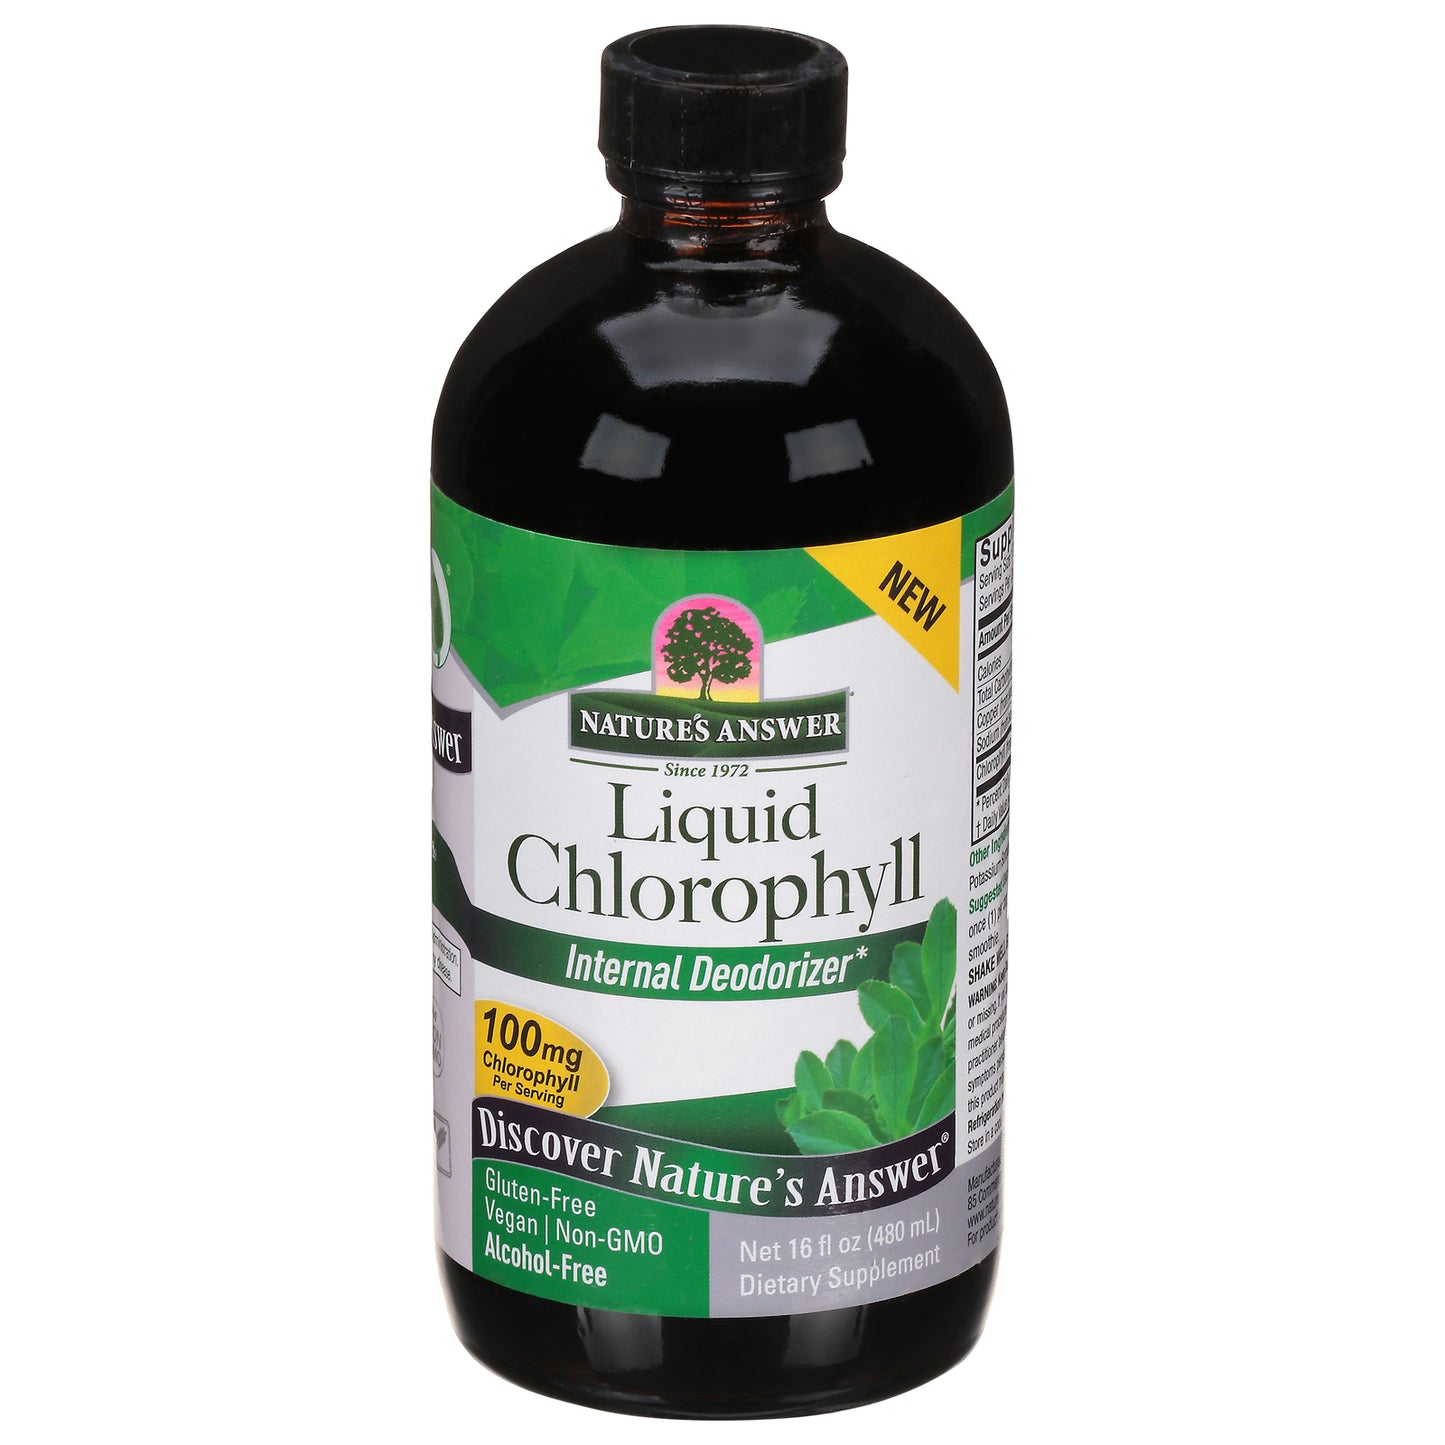 Nature's Answer - Chlorophyll Liquid - 1 Each-16 Fz